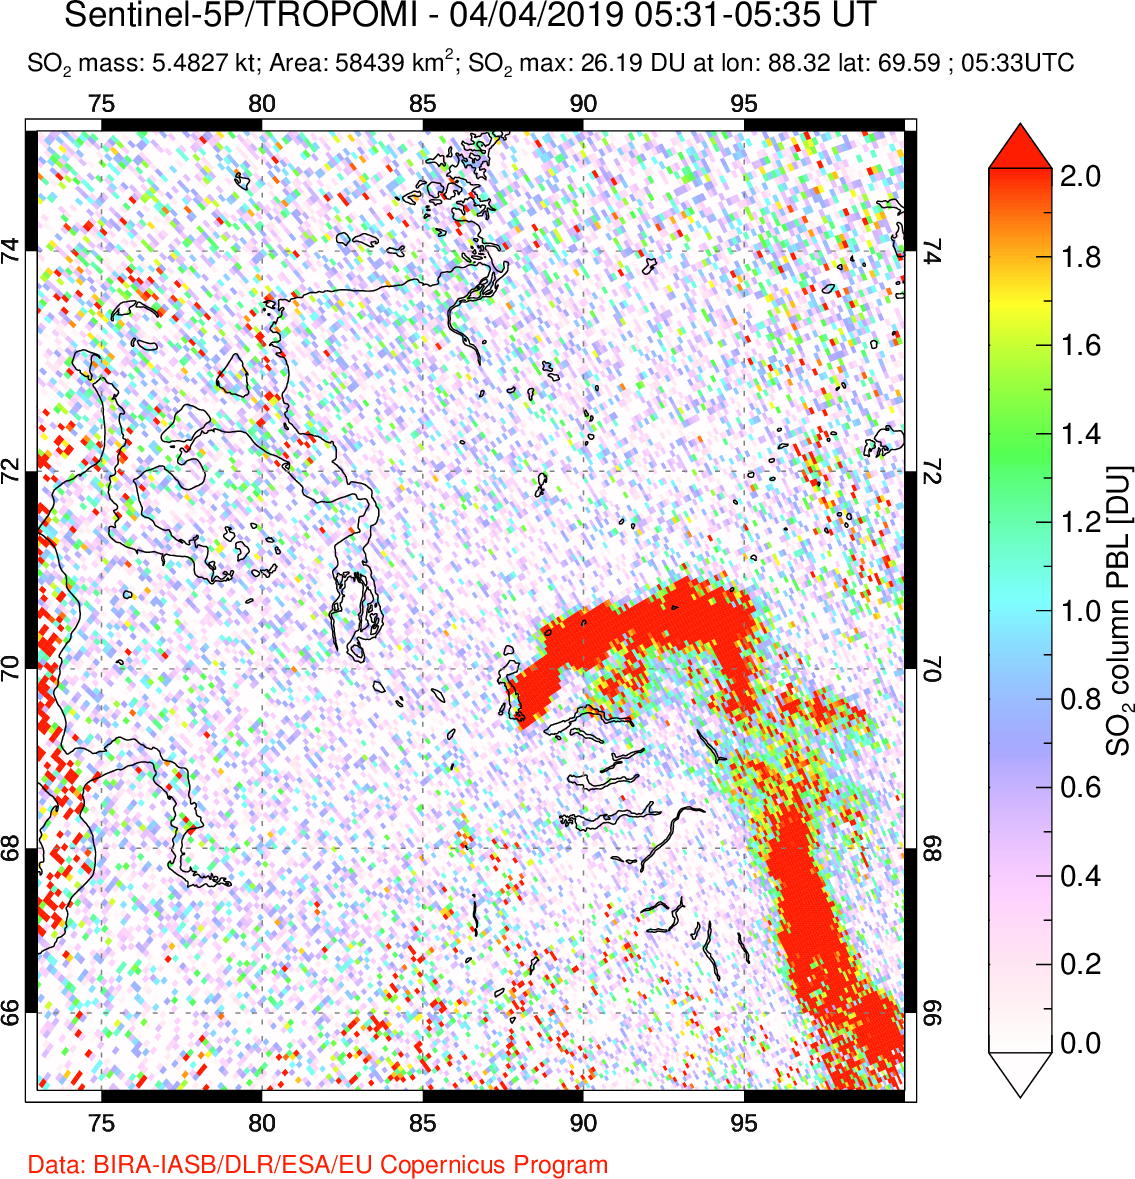 A sulfur dioxide image over Norilsk, Russian Federation on Apr 04, 2019.